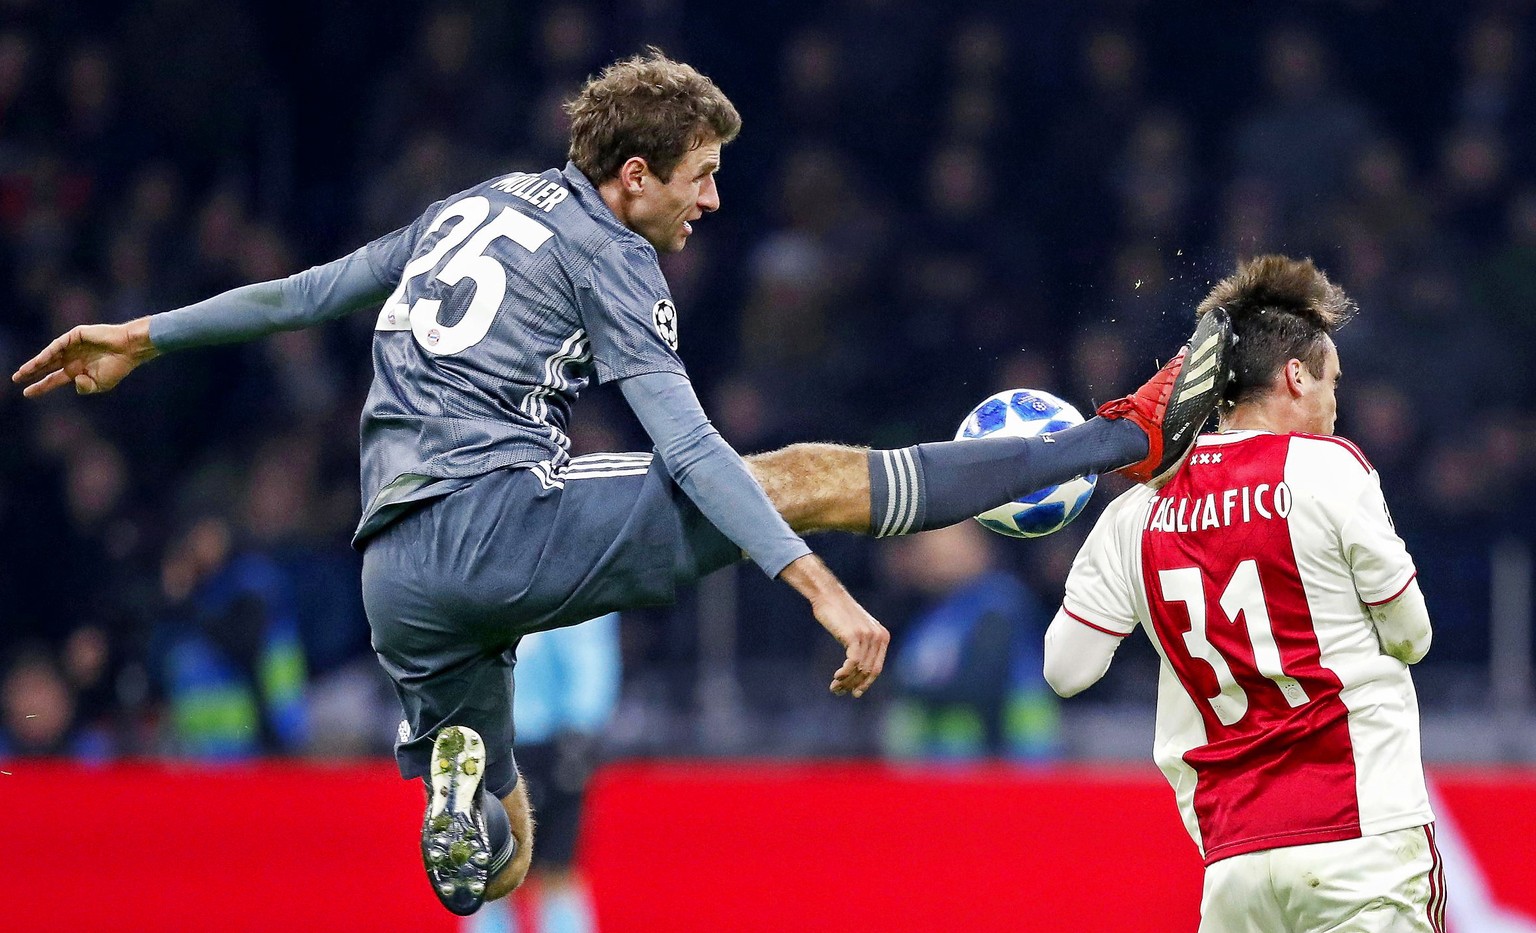 epa07227146 Thomas Mueller (L) of Bayern Munich fouls Nicolas Tafliafico (R) of Ajax during the UEFA Champions League Group E soccer match between Ajax Amsterdam and Bayern Munich in Amsterdam, Nether ...